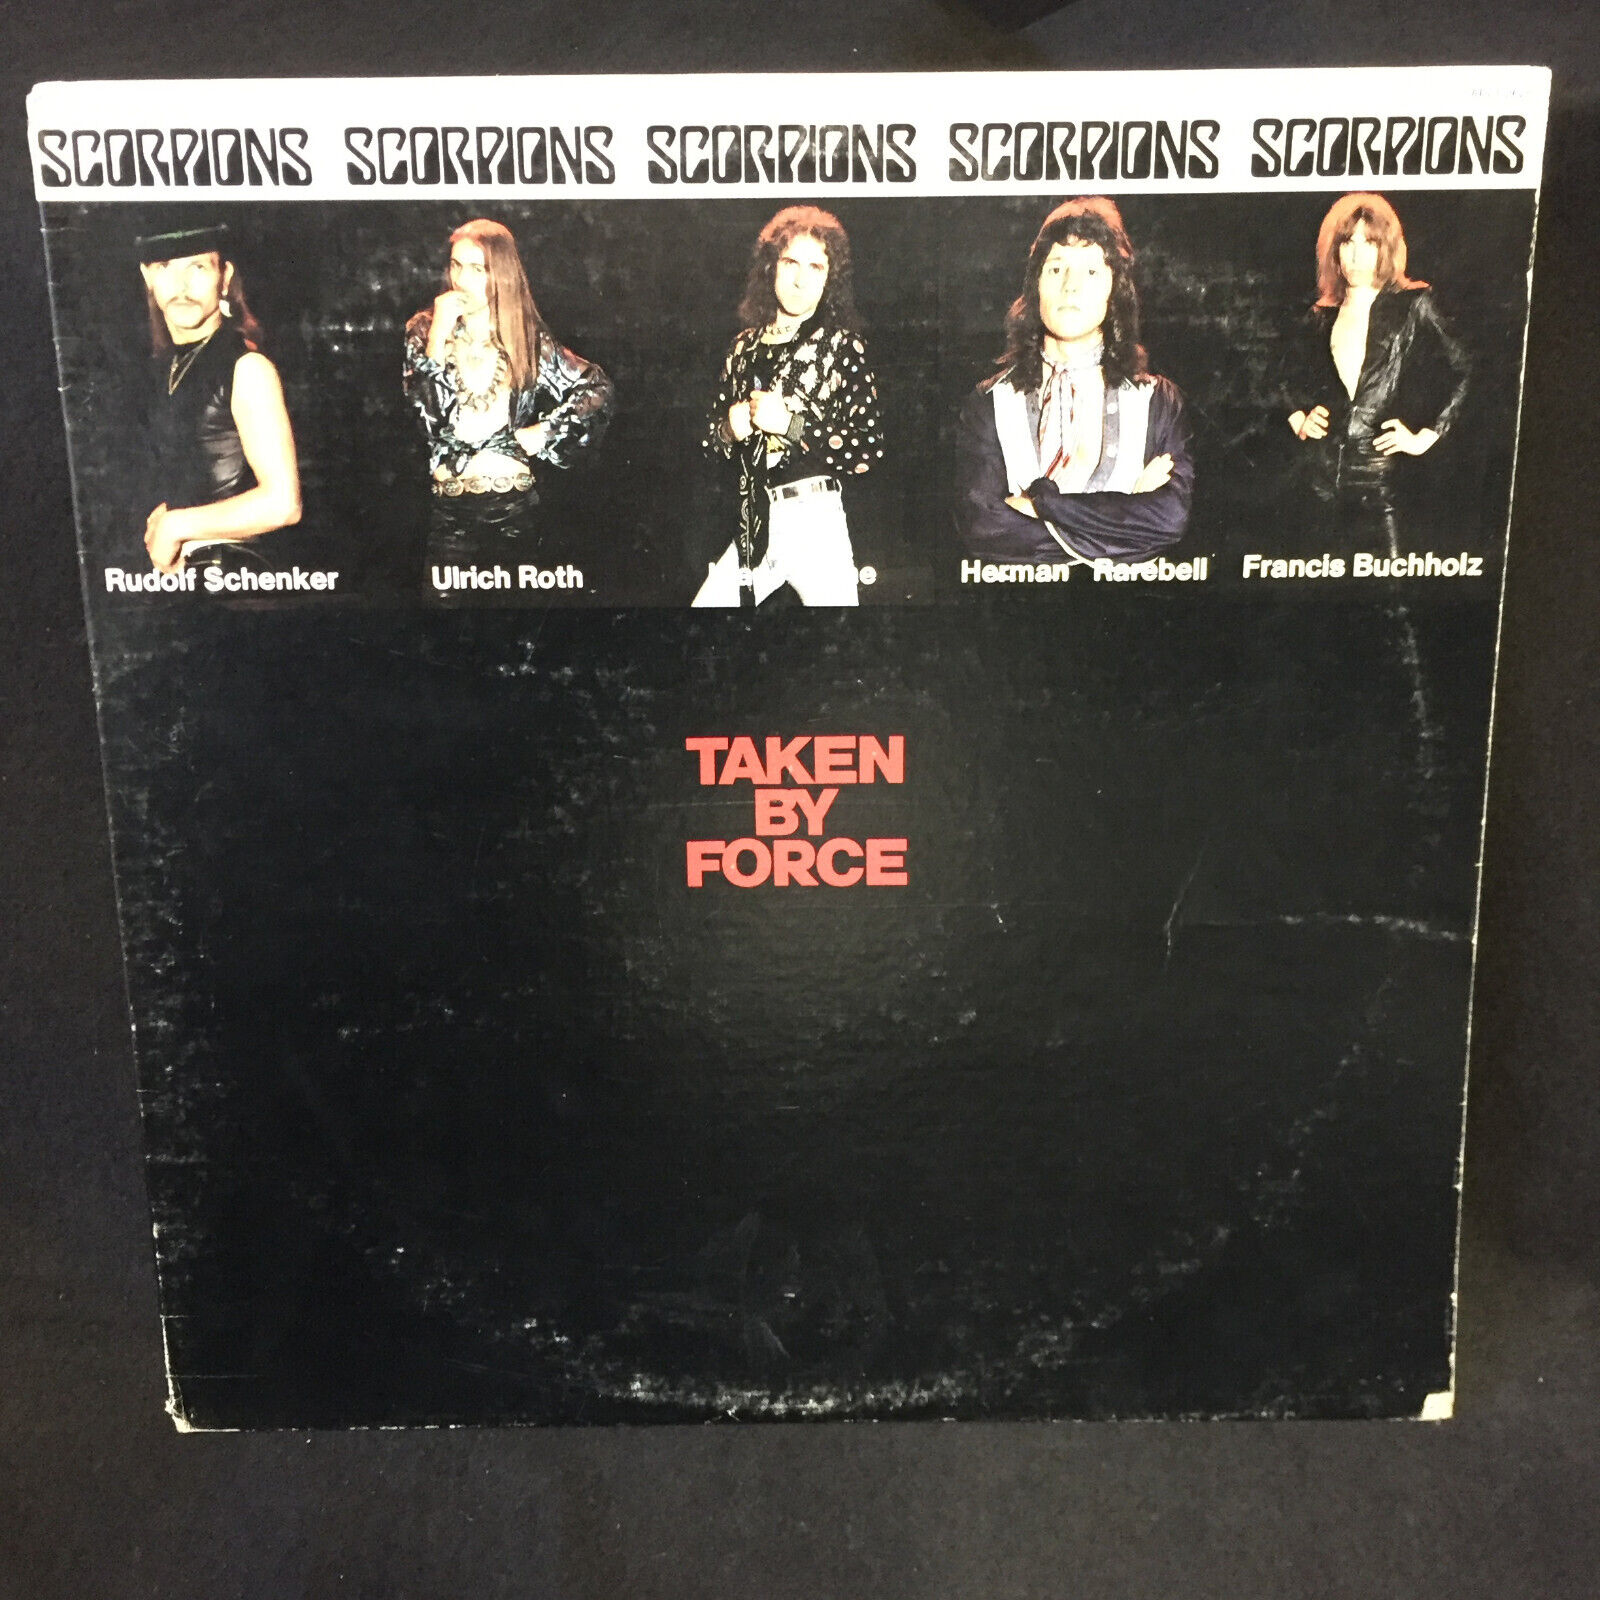 Scorpions Taken By Force LP APL1-2628 1st Pressing 1977 VG+/VG+